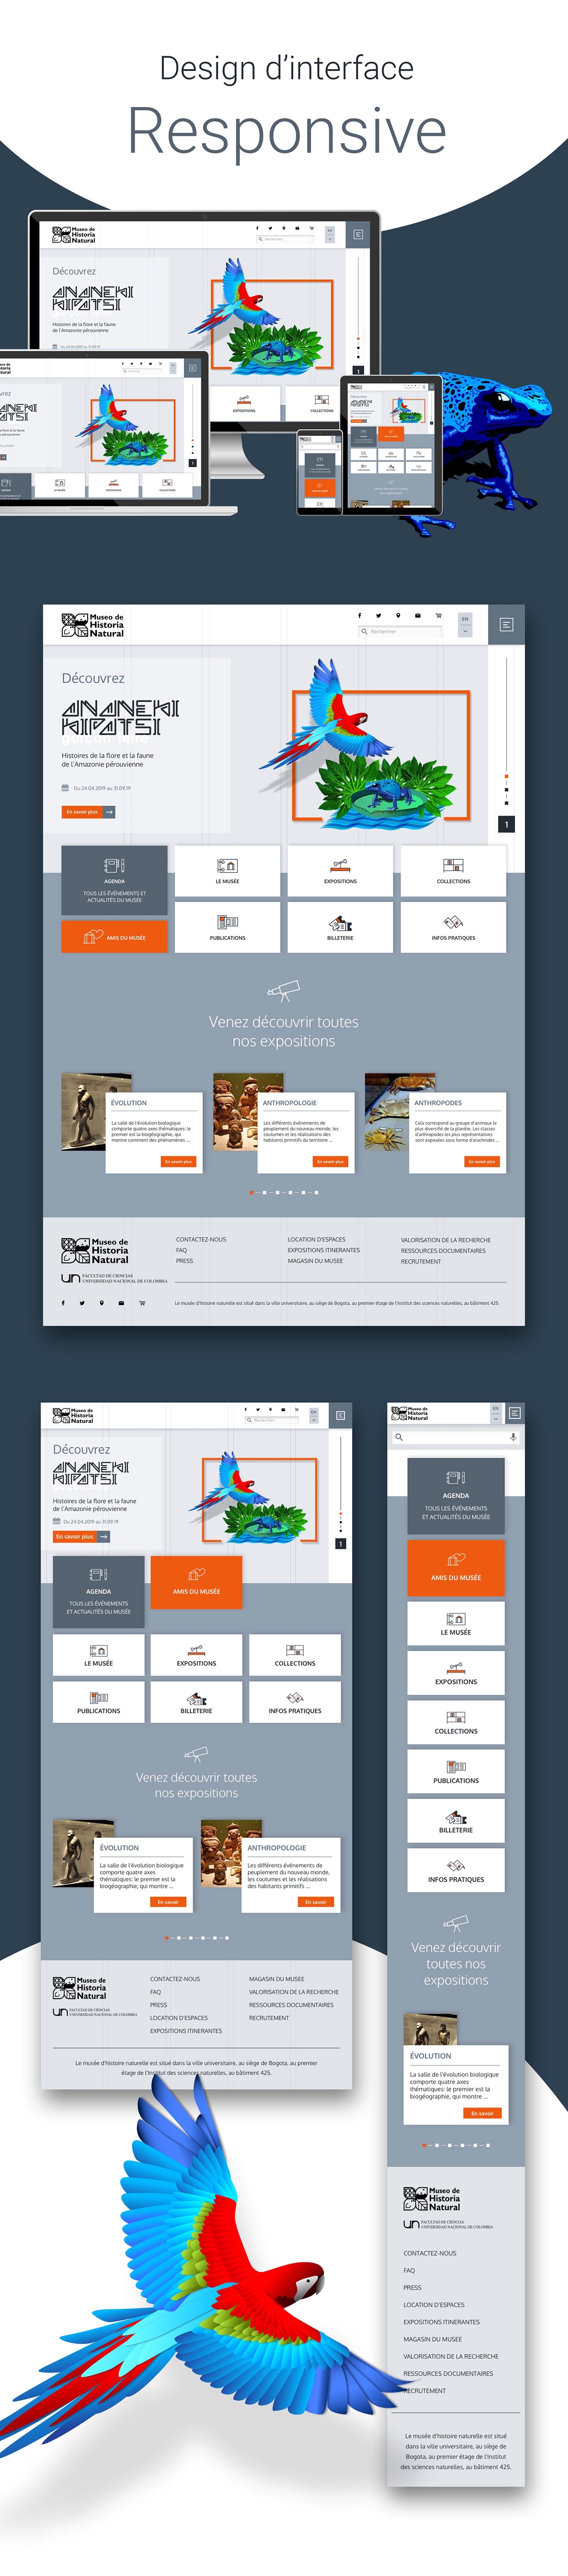 Webdesign design de sites sites web design d'interface interface design Responsive ui design